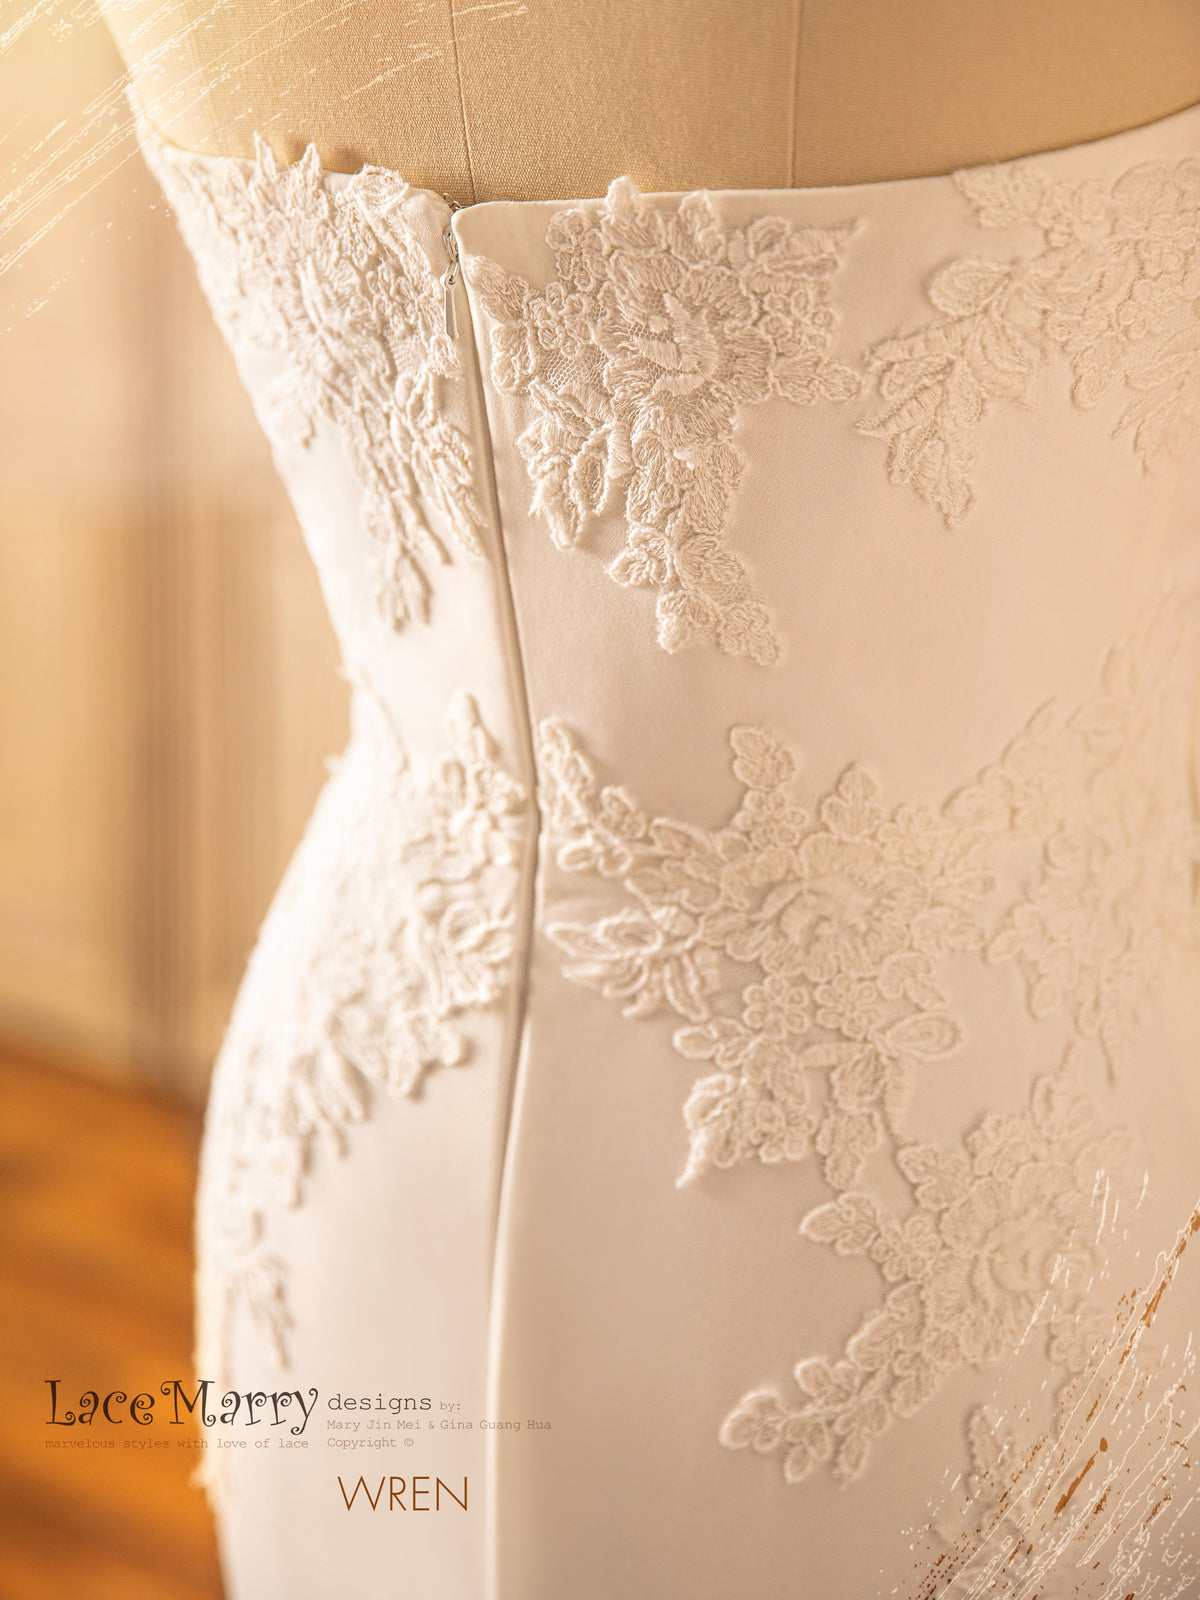 WREN / Elegant Wedding Dress with Romantic Neckline